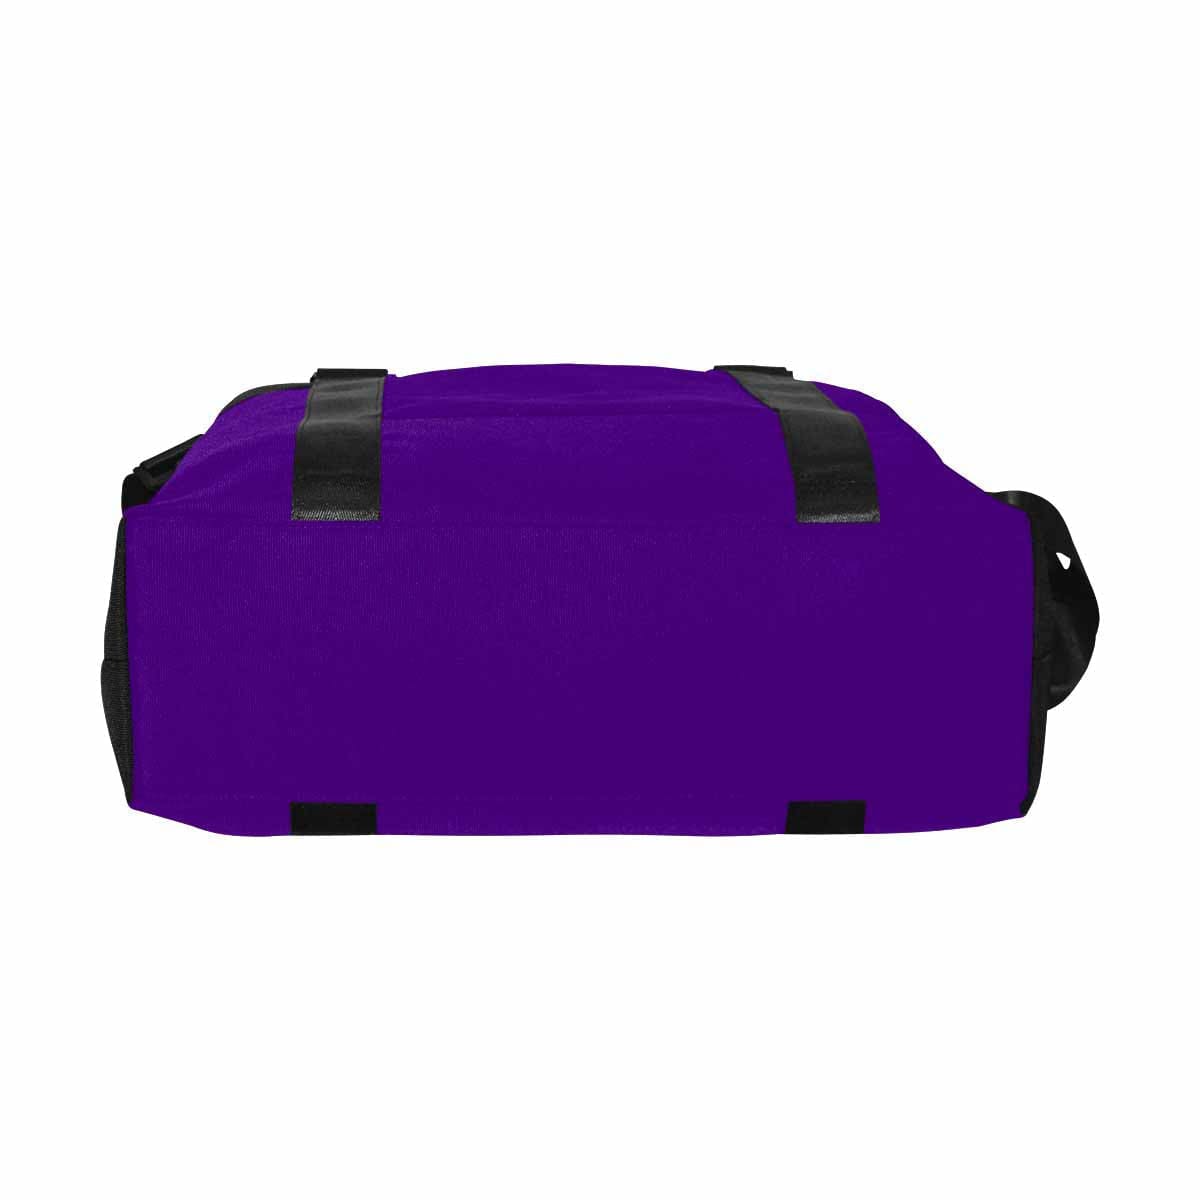 Indigo Purple Duffel Bag Large Travel Carry On - Bags | Duffel Bags